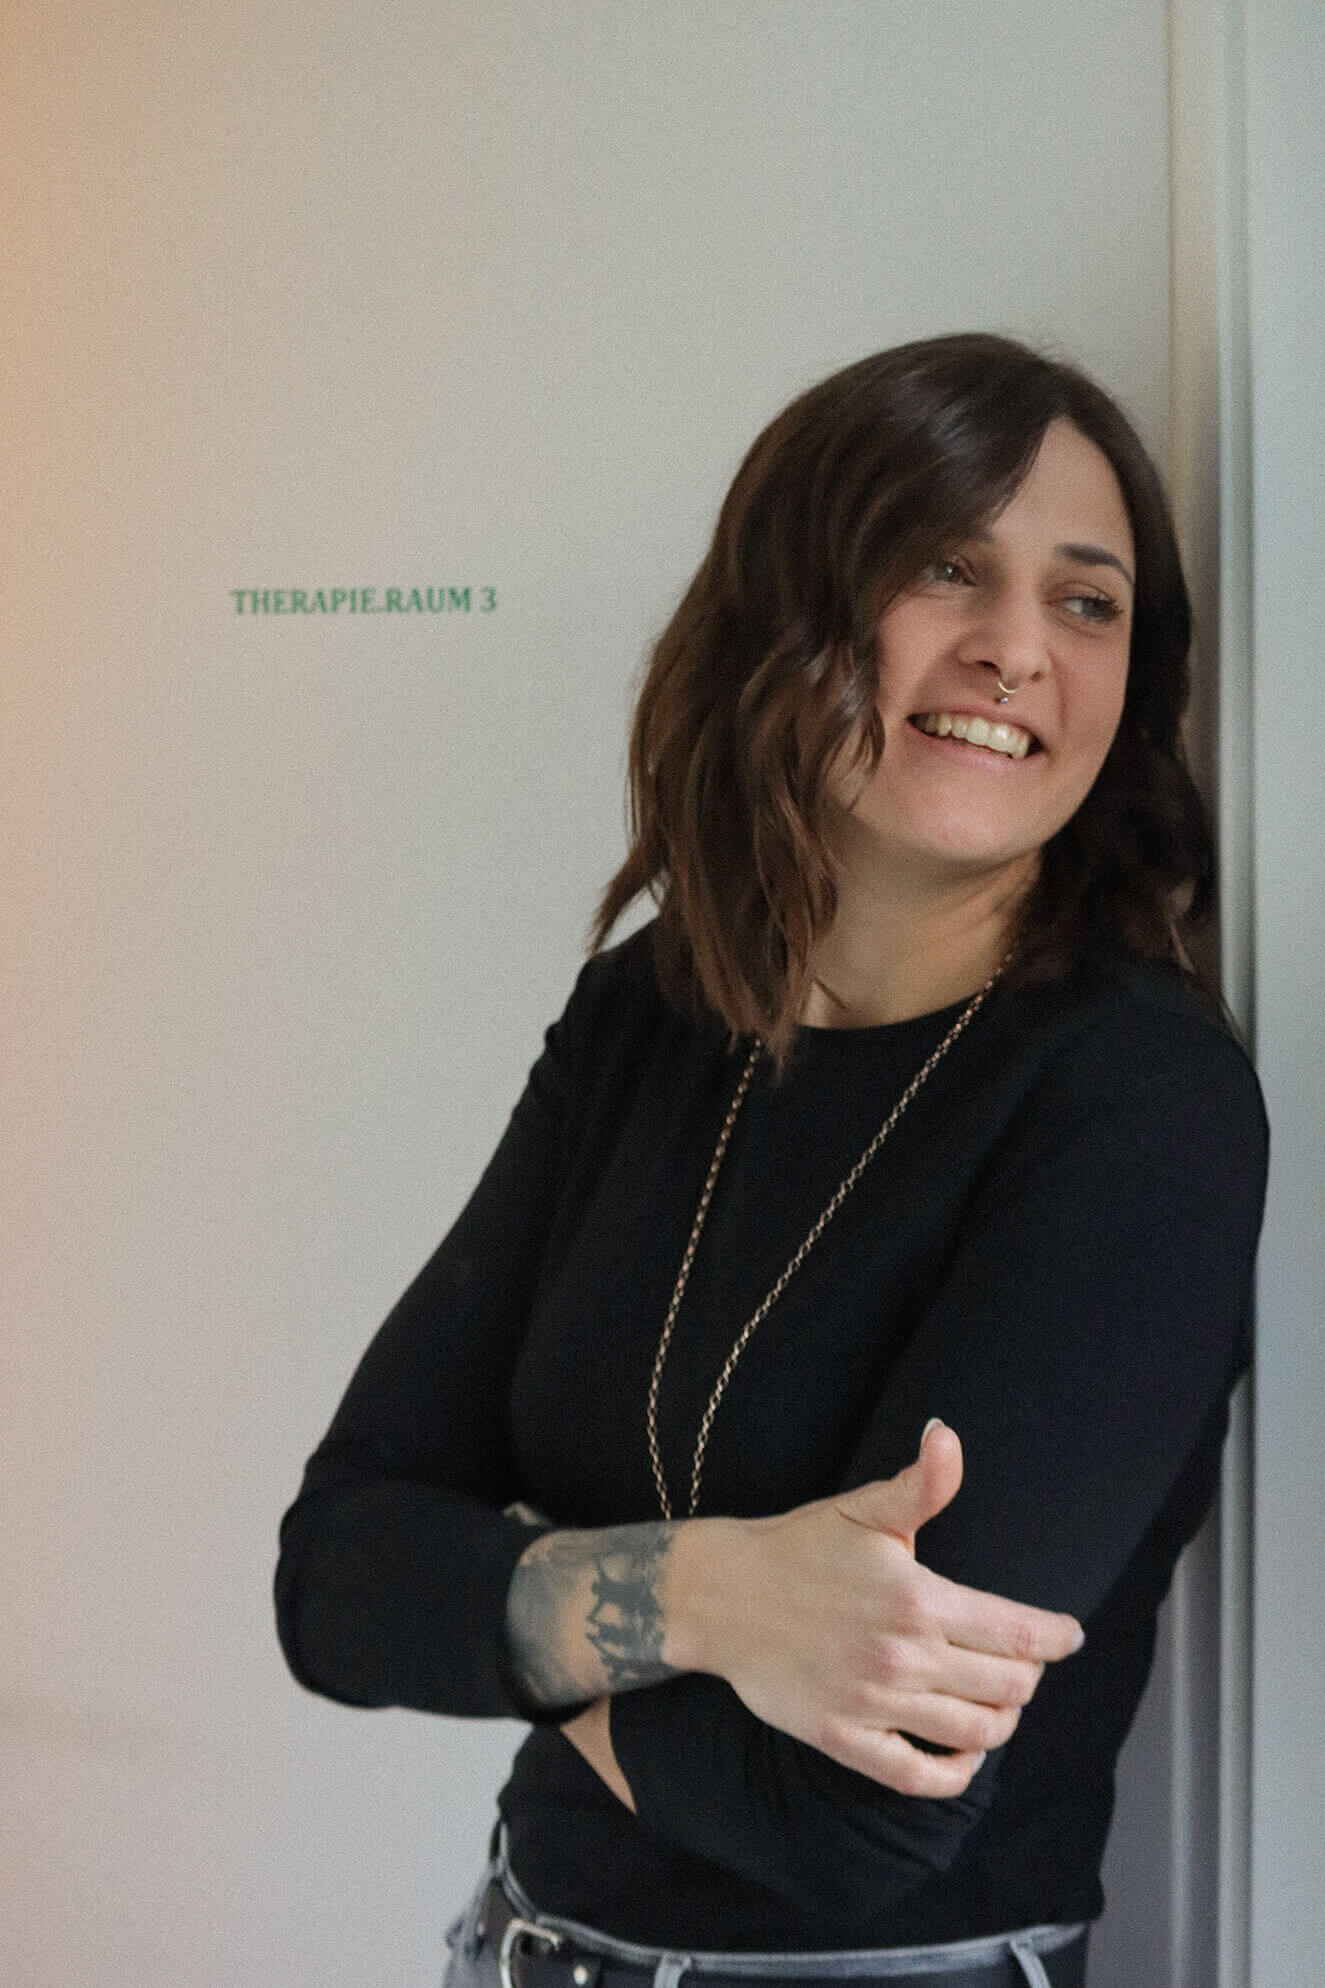 Lächelnde Kerstin Dörflinger neben Schild "THERAPIE RAUM 3".